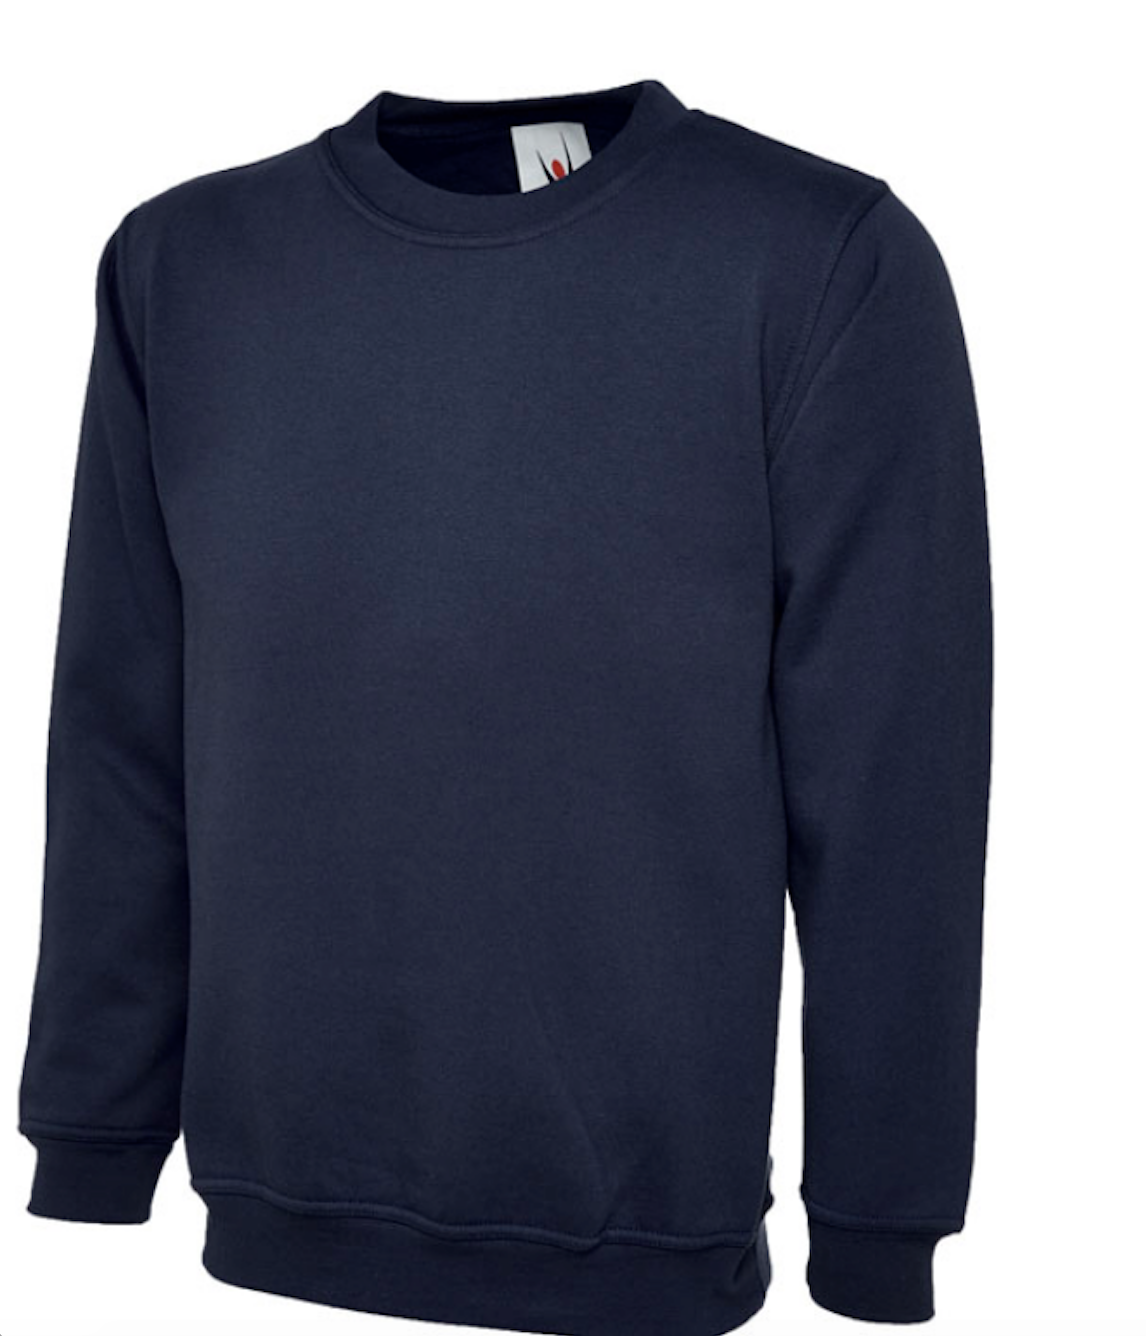 Brinsbury Sweatshirt (Unisex)